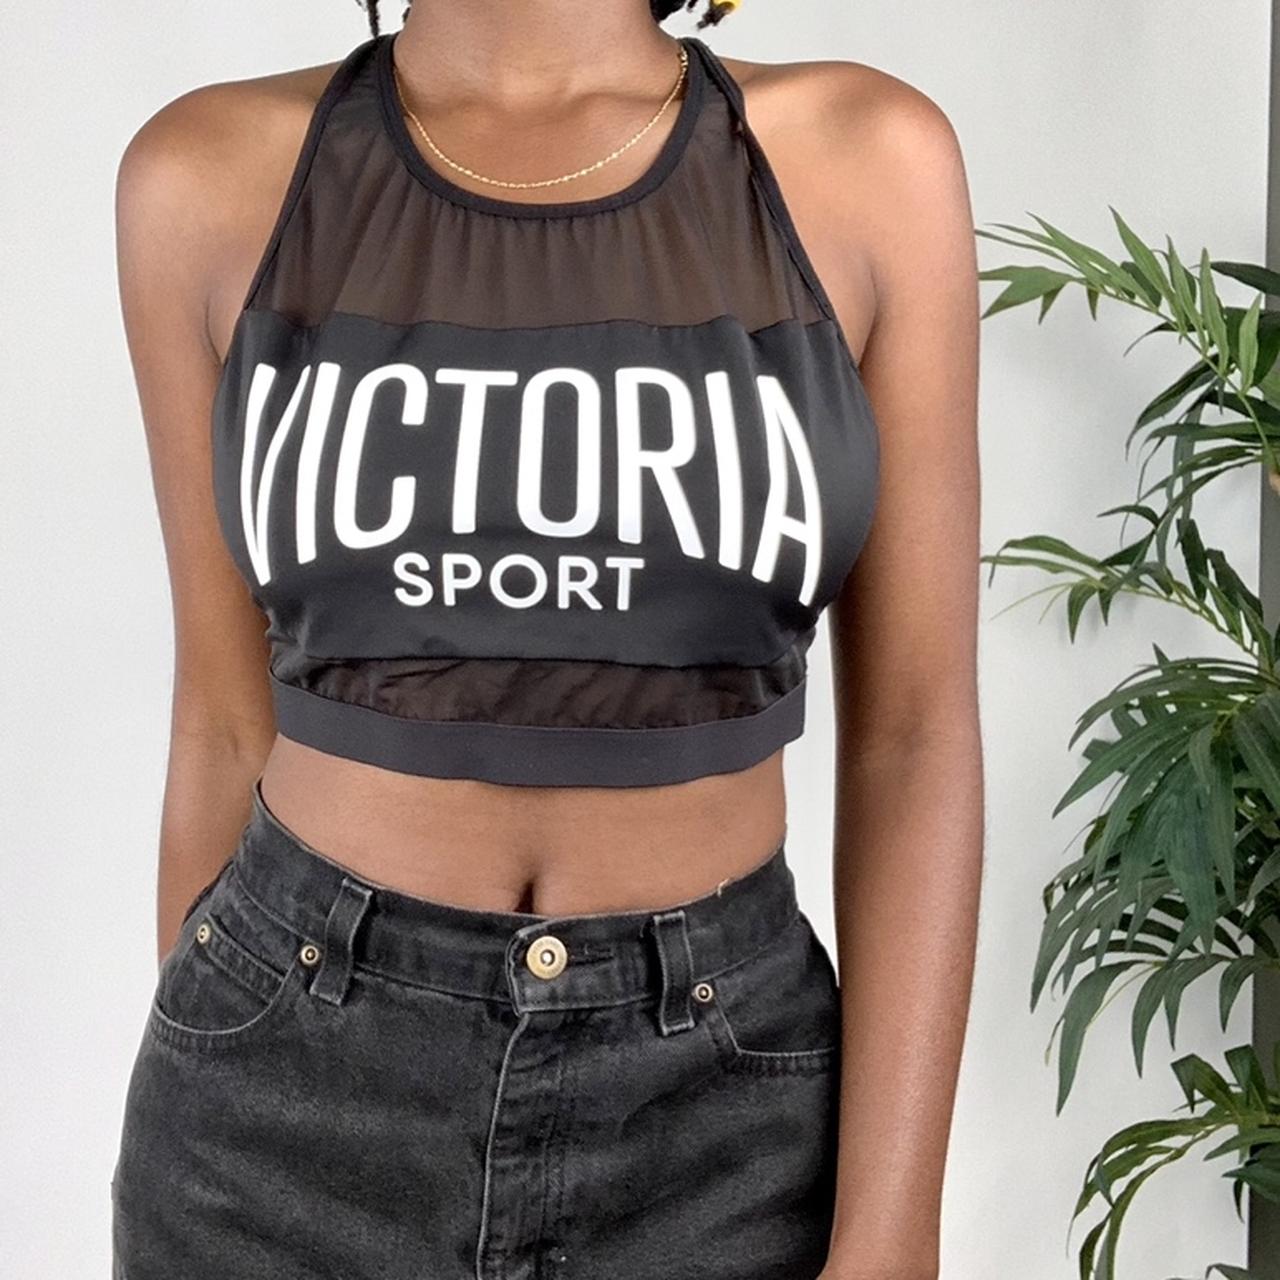 Black Victoria sport bra -size M -stretchy material - Depop